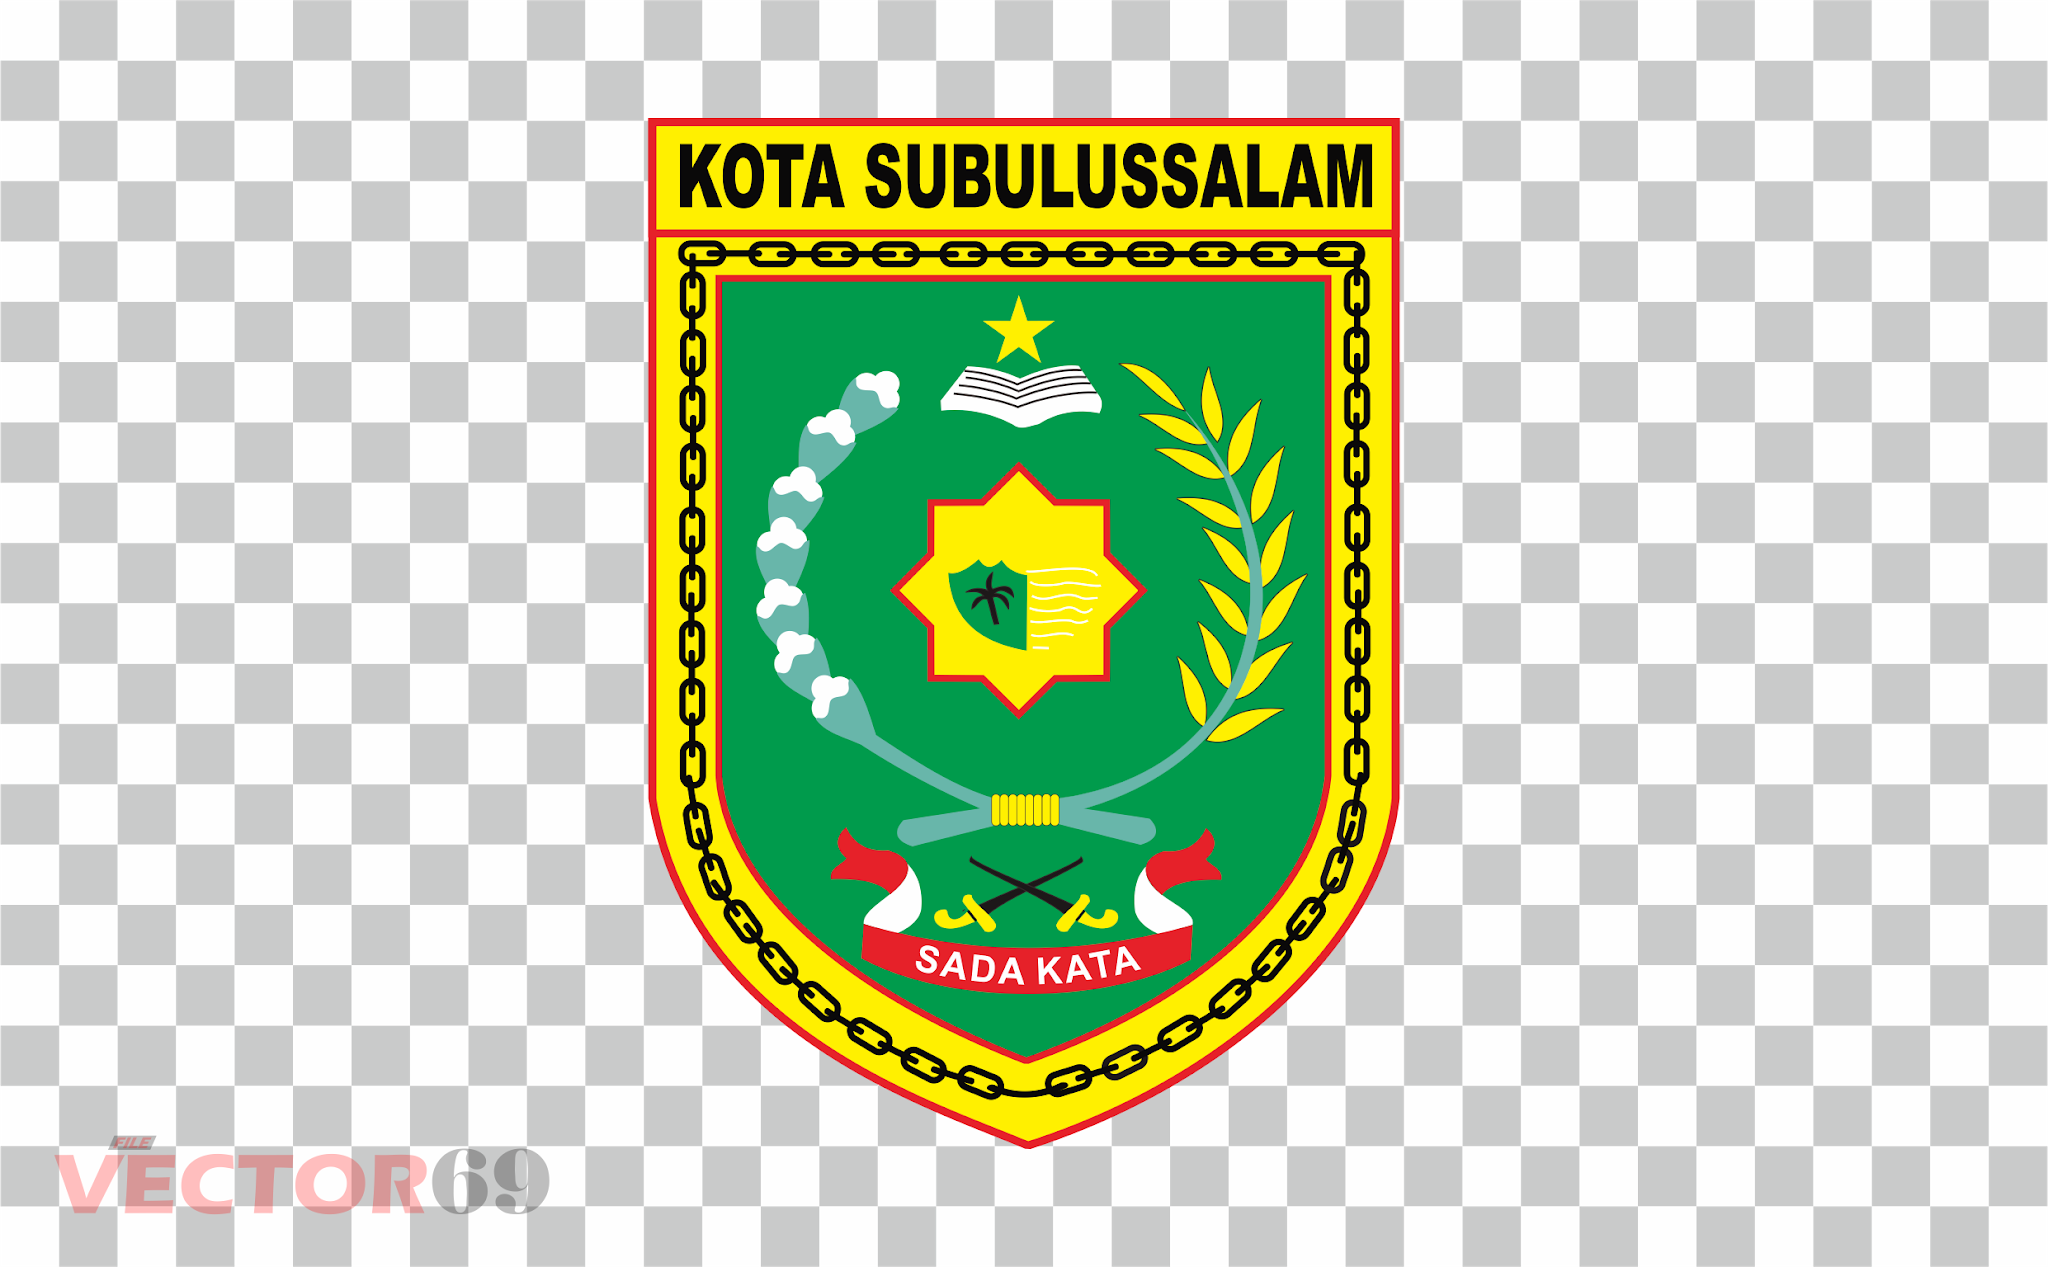 Kota Subulussalam Logo - Download Vector File PNG (Portable Network Graphics)